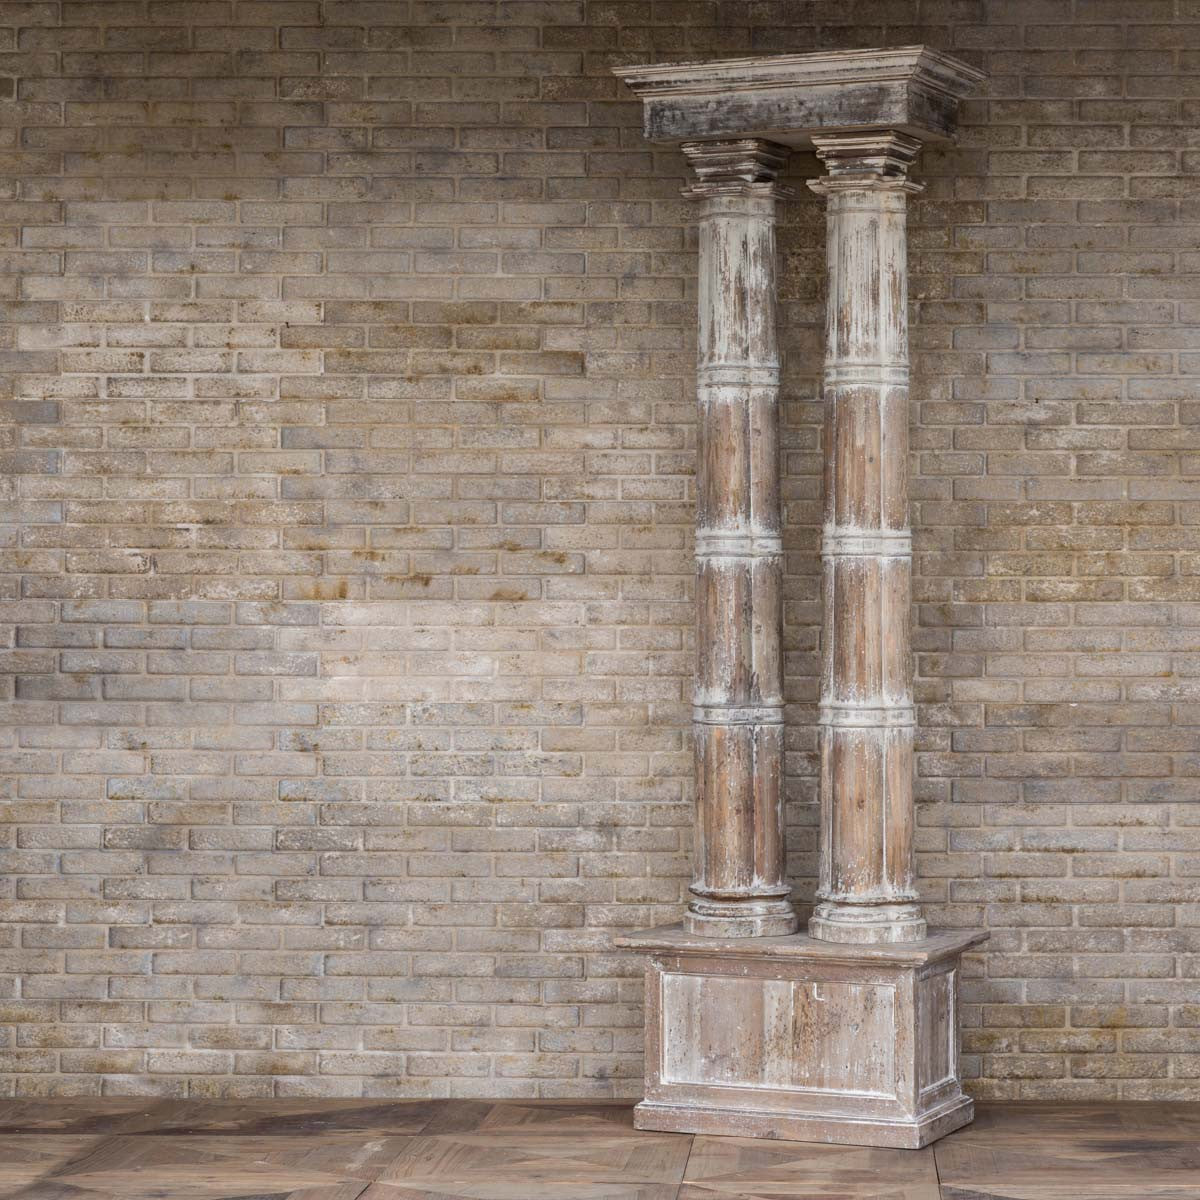 park hill collection roman columns for sale, Double Pillar relics for sale